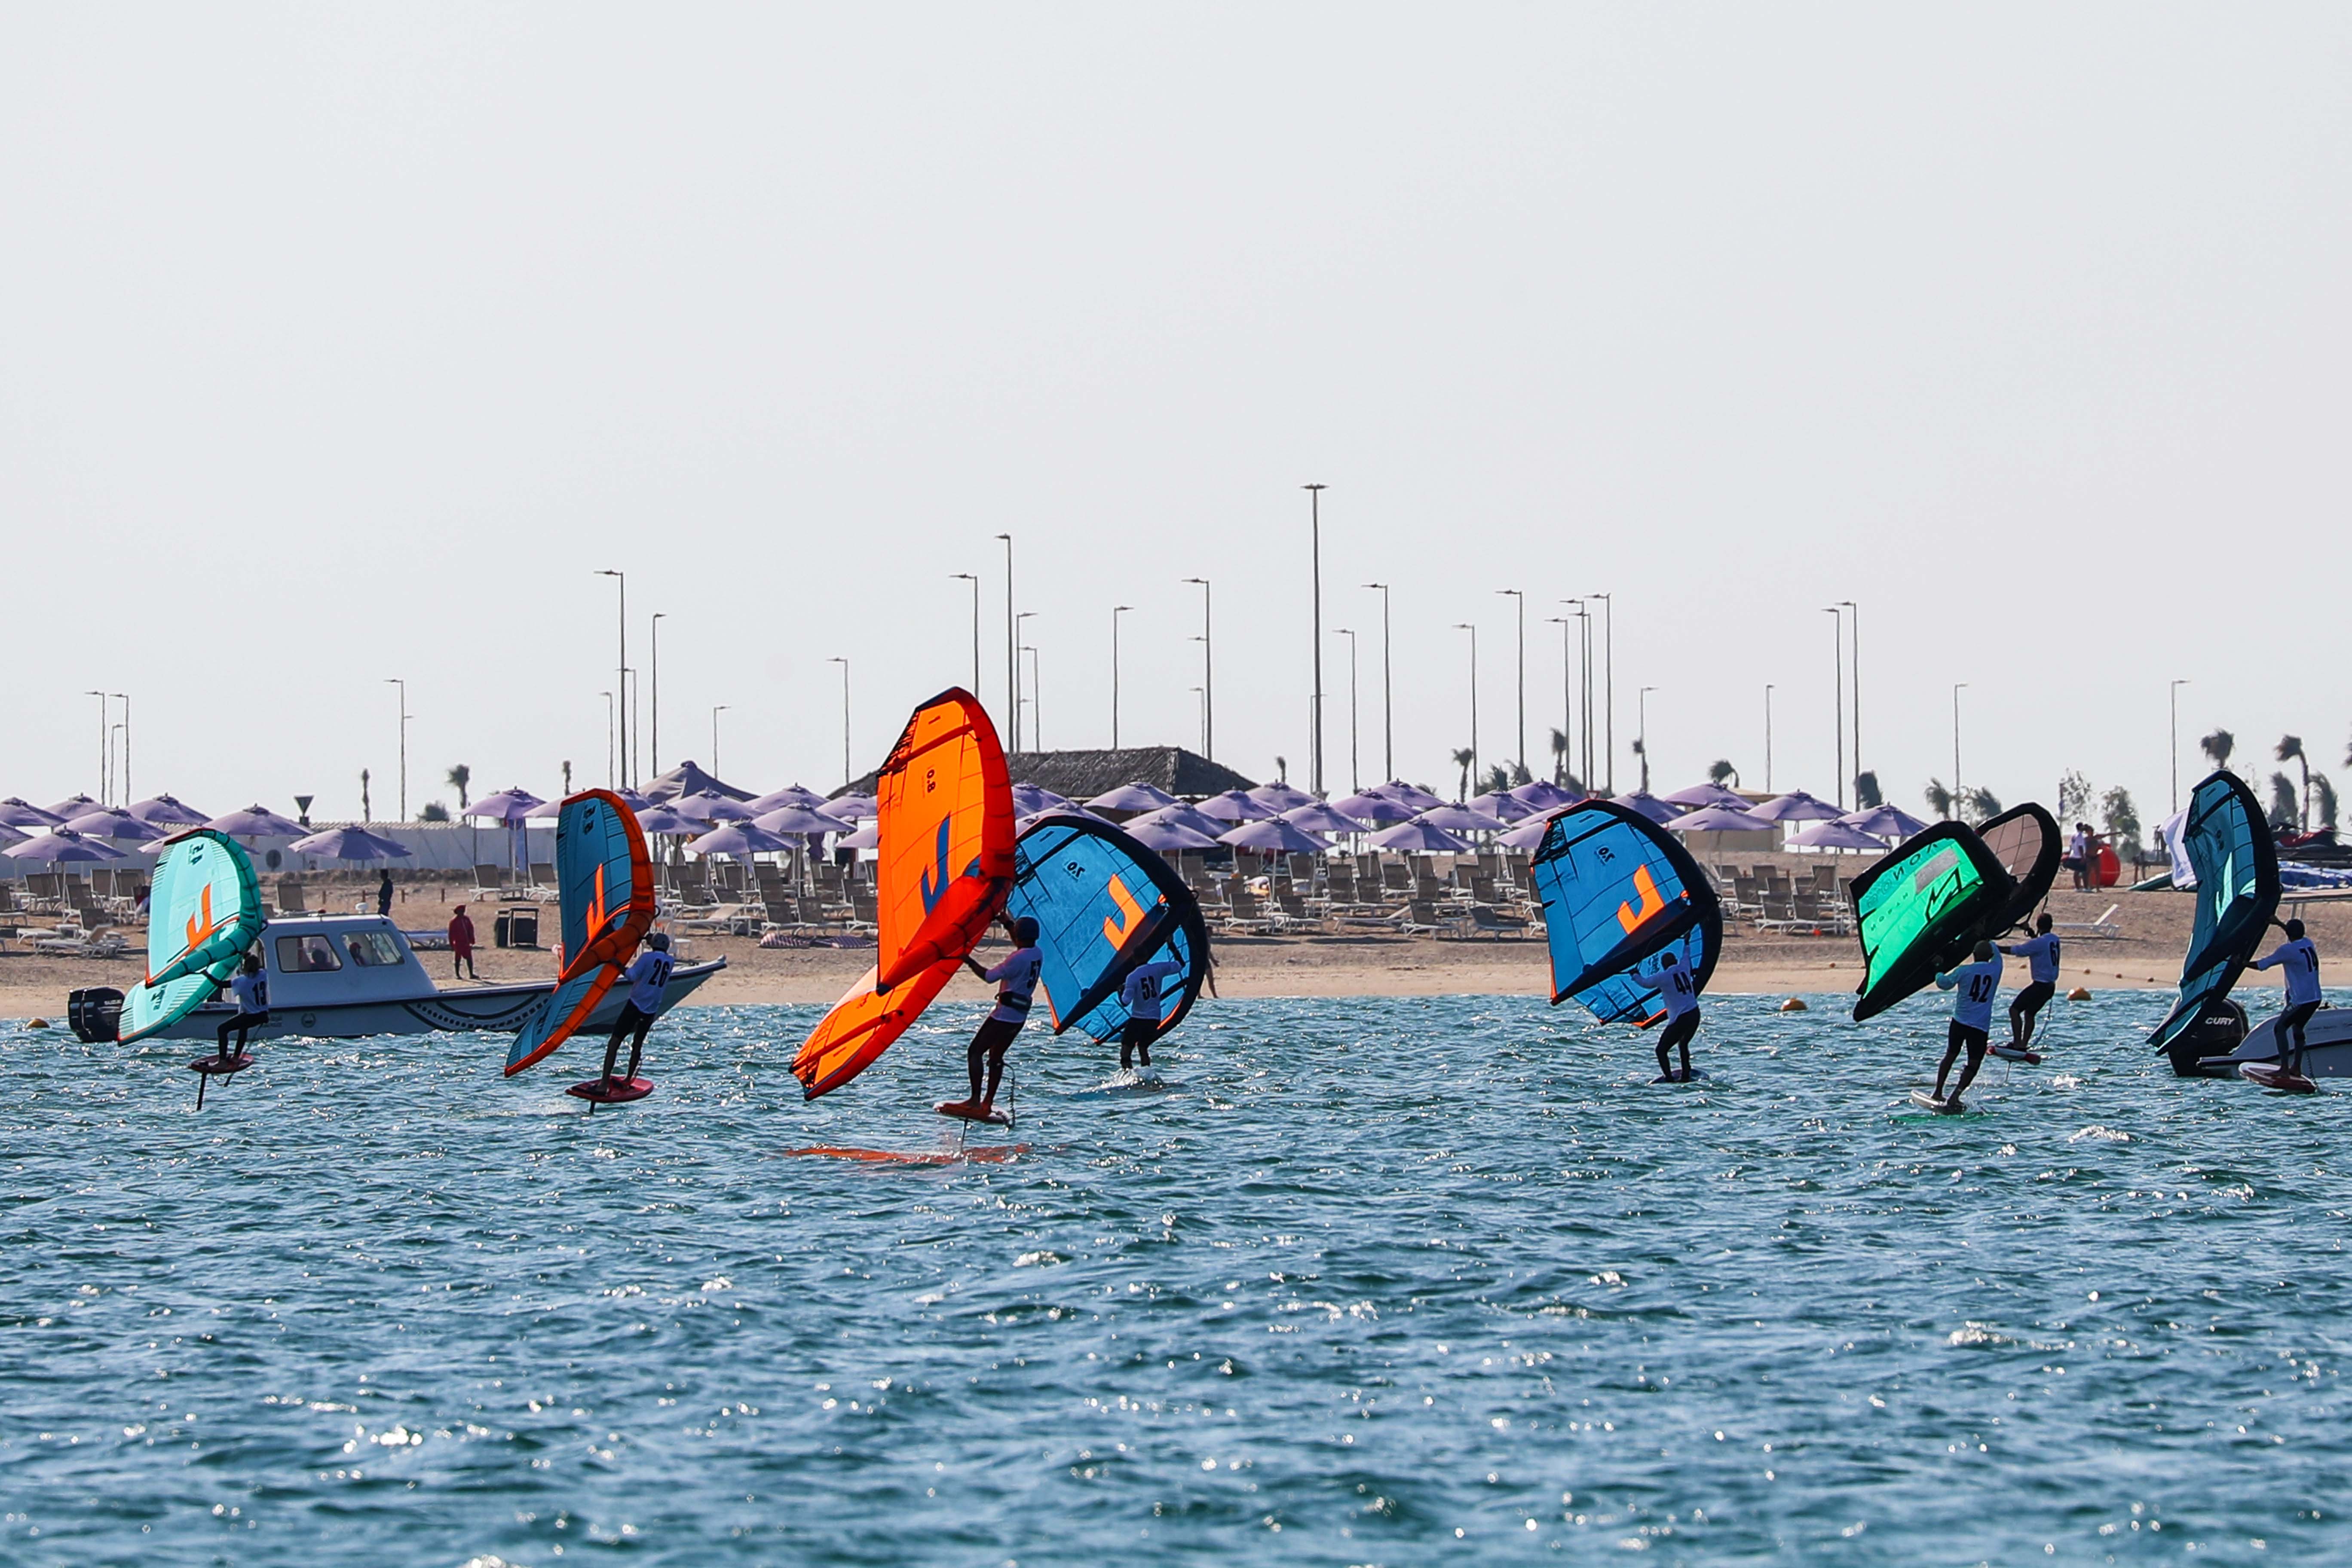 Organizational Success for First Round of Dubai Kitesurf Open